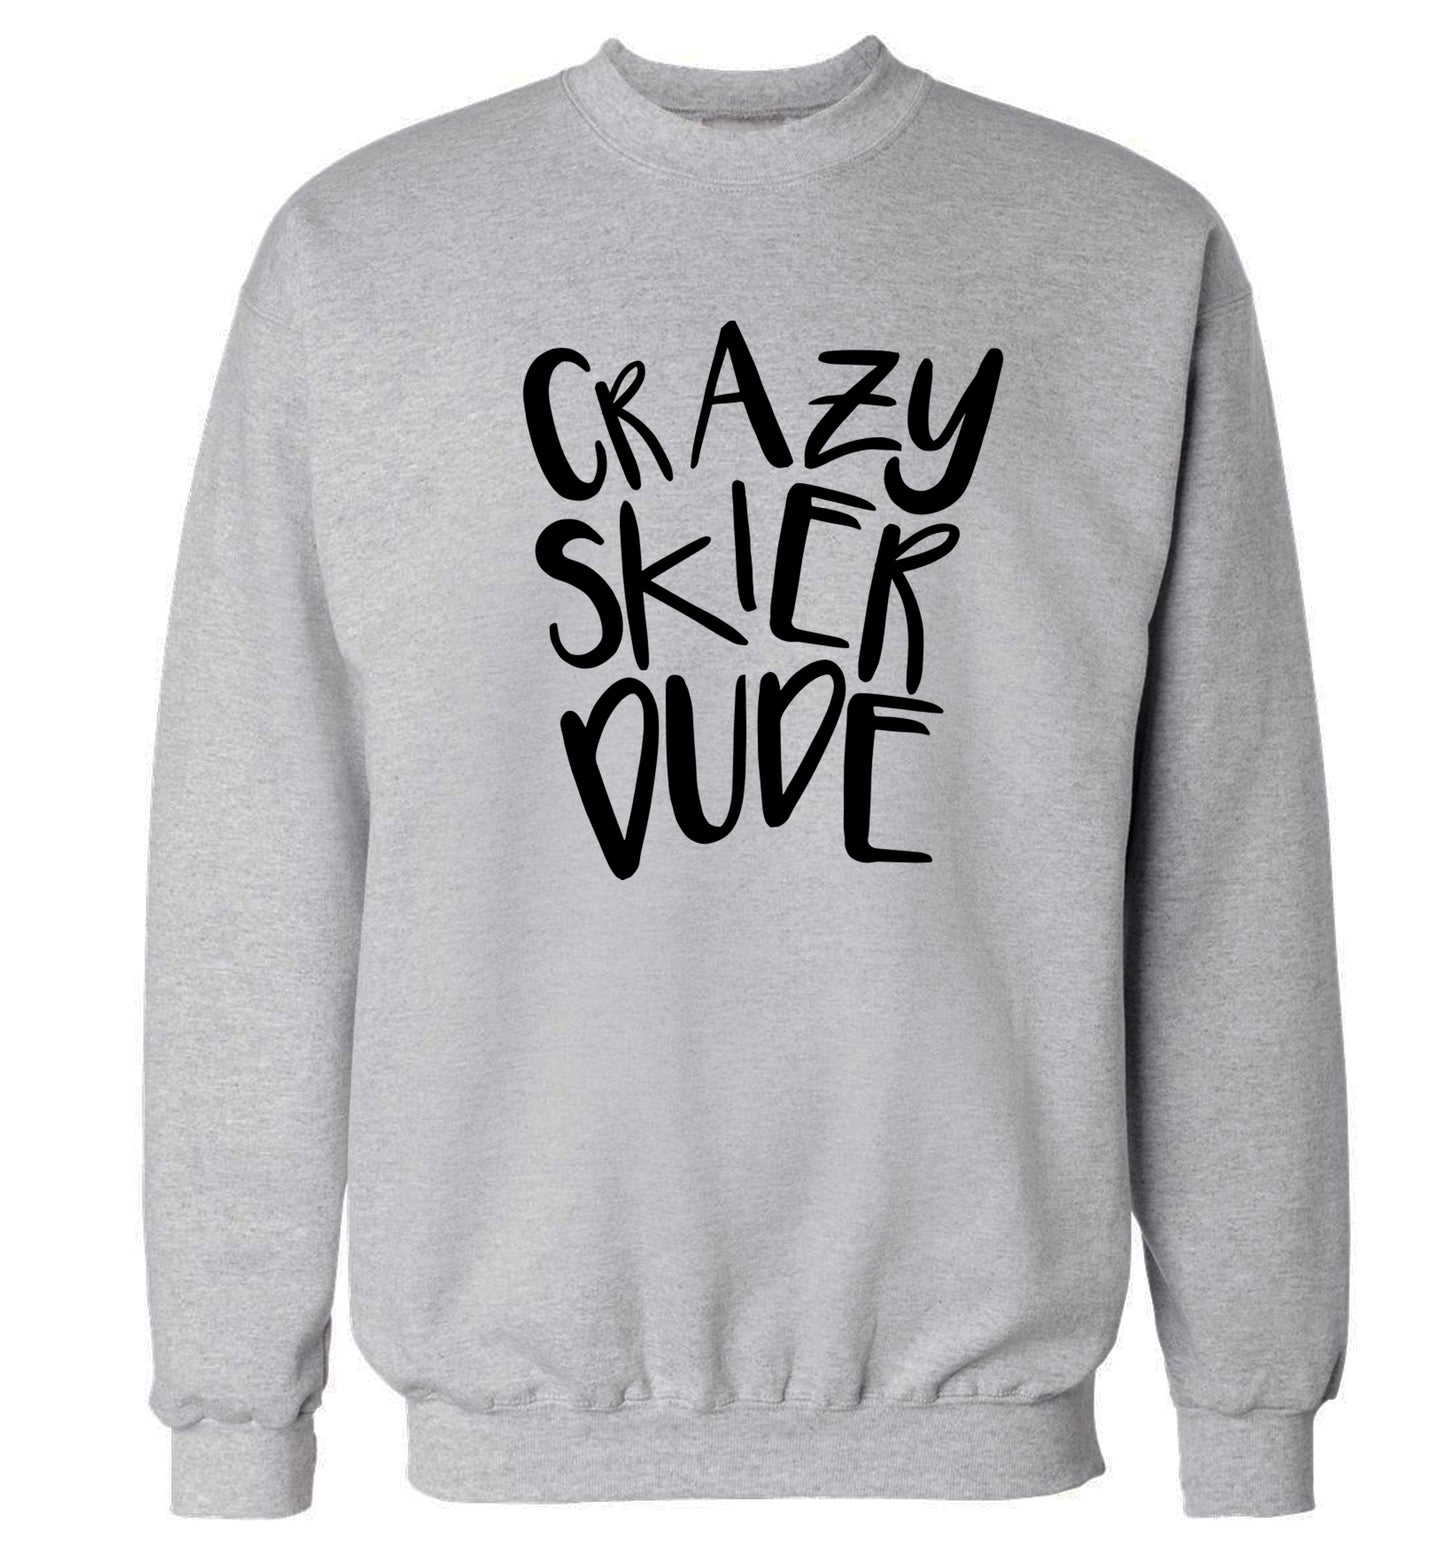 Crazy skier dude Adult's unisexgrey Sweater 2XL